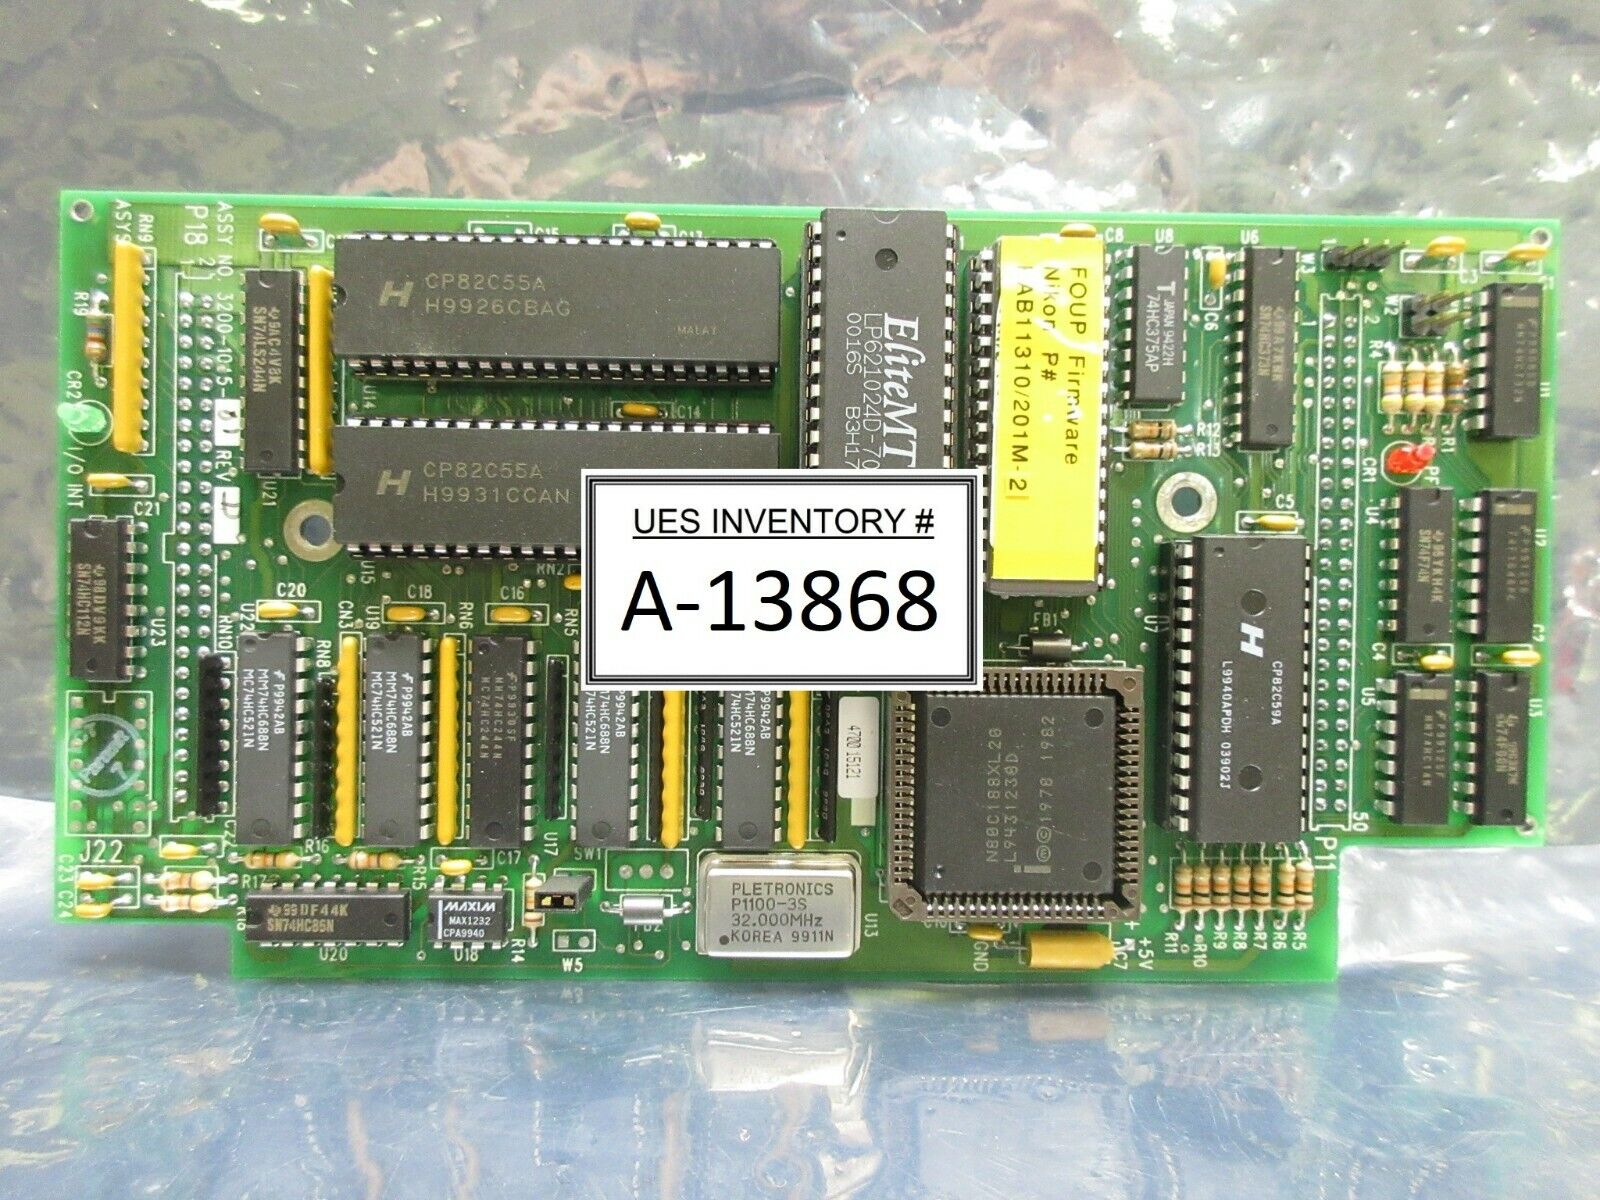 Asyst Technologies 3200-1015-01 Processor Board PCB Rev. D Nikon KAB11310/201M-2